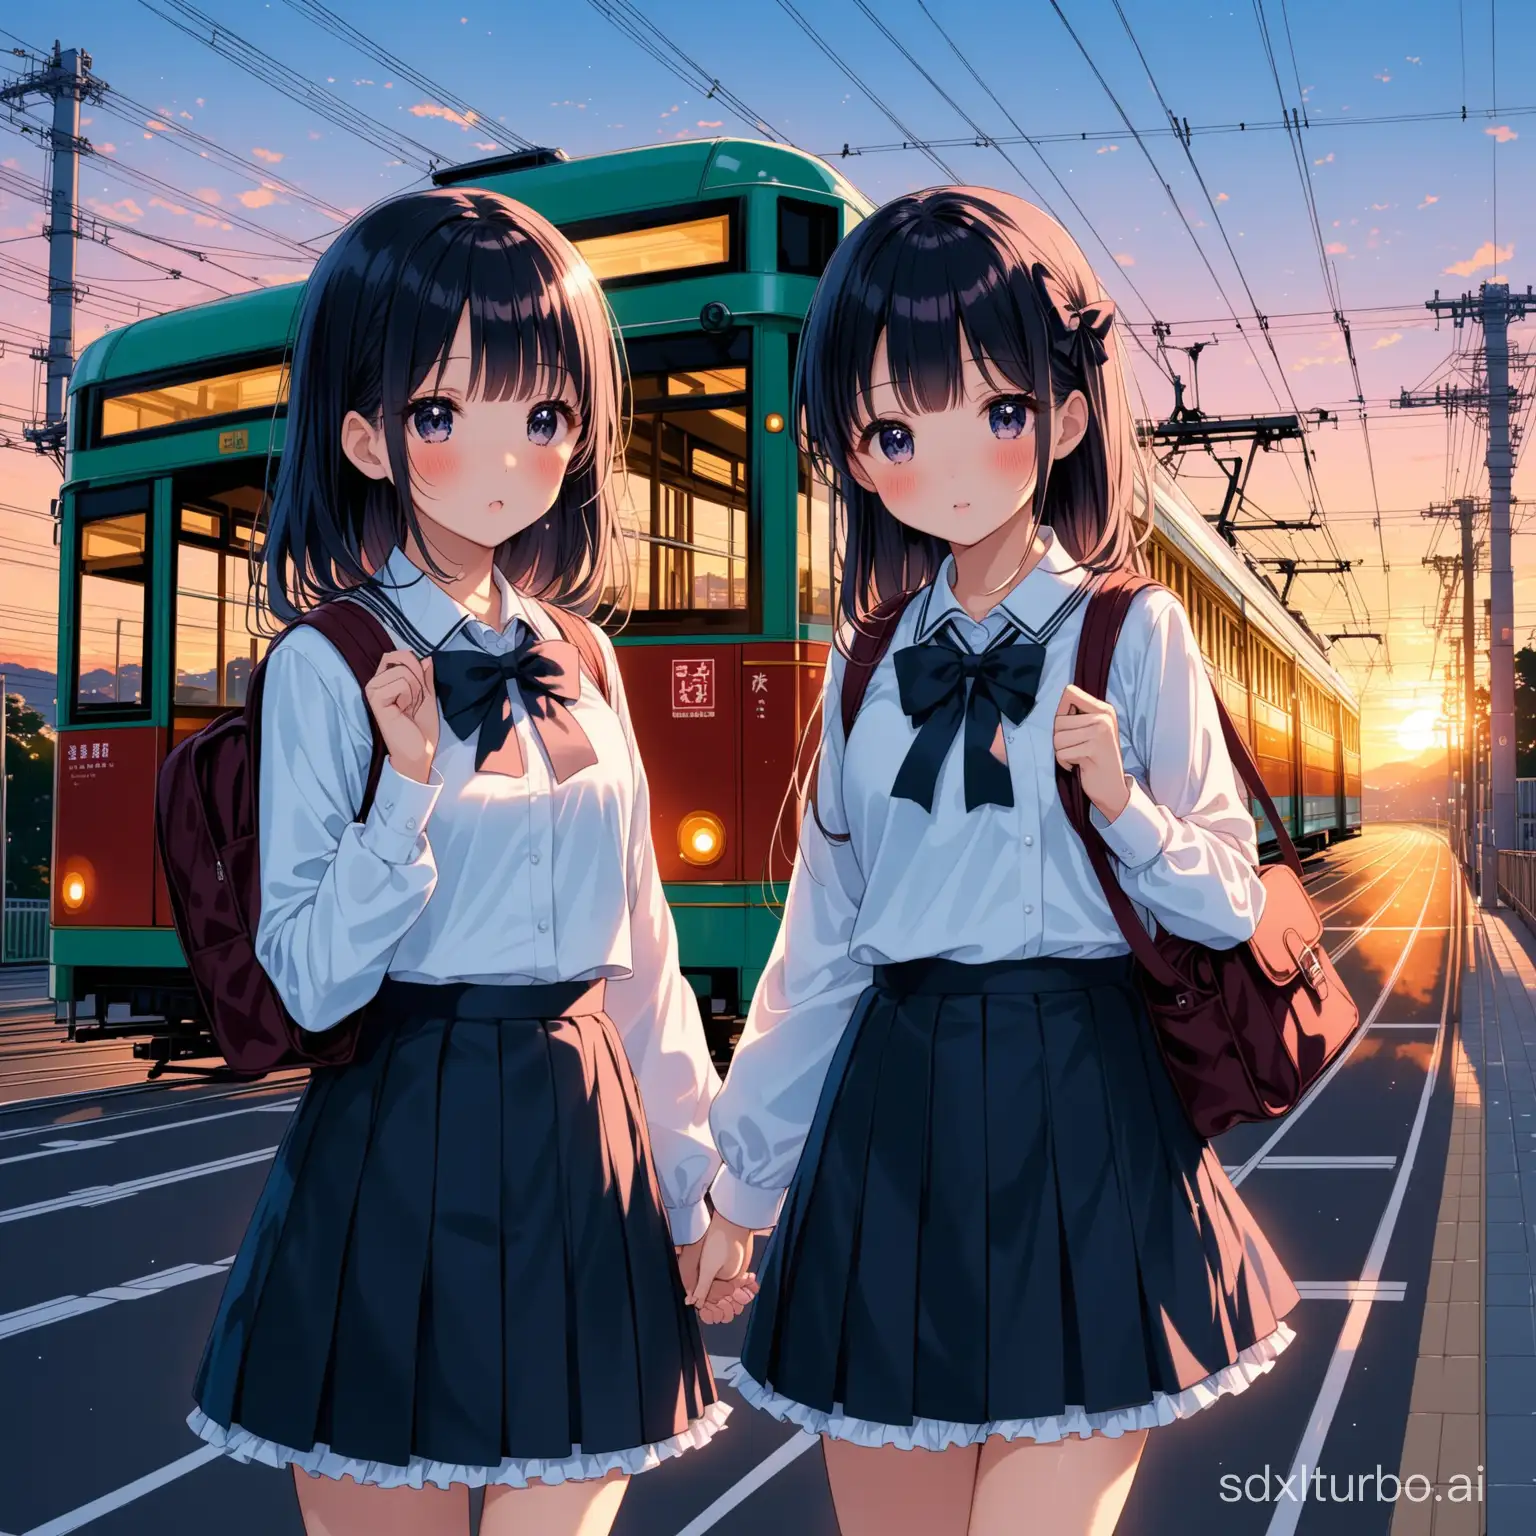 Japanese-Dusk-Tram-Adorable-Elementary-School-Students-in-Beautiful-School-Uniforms